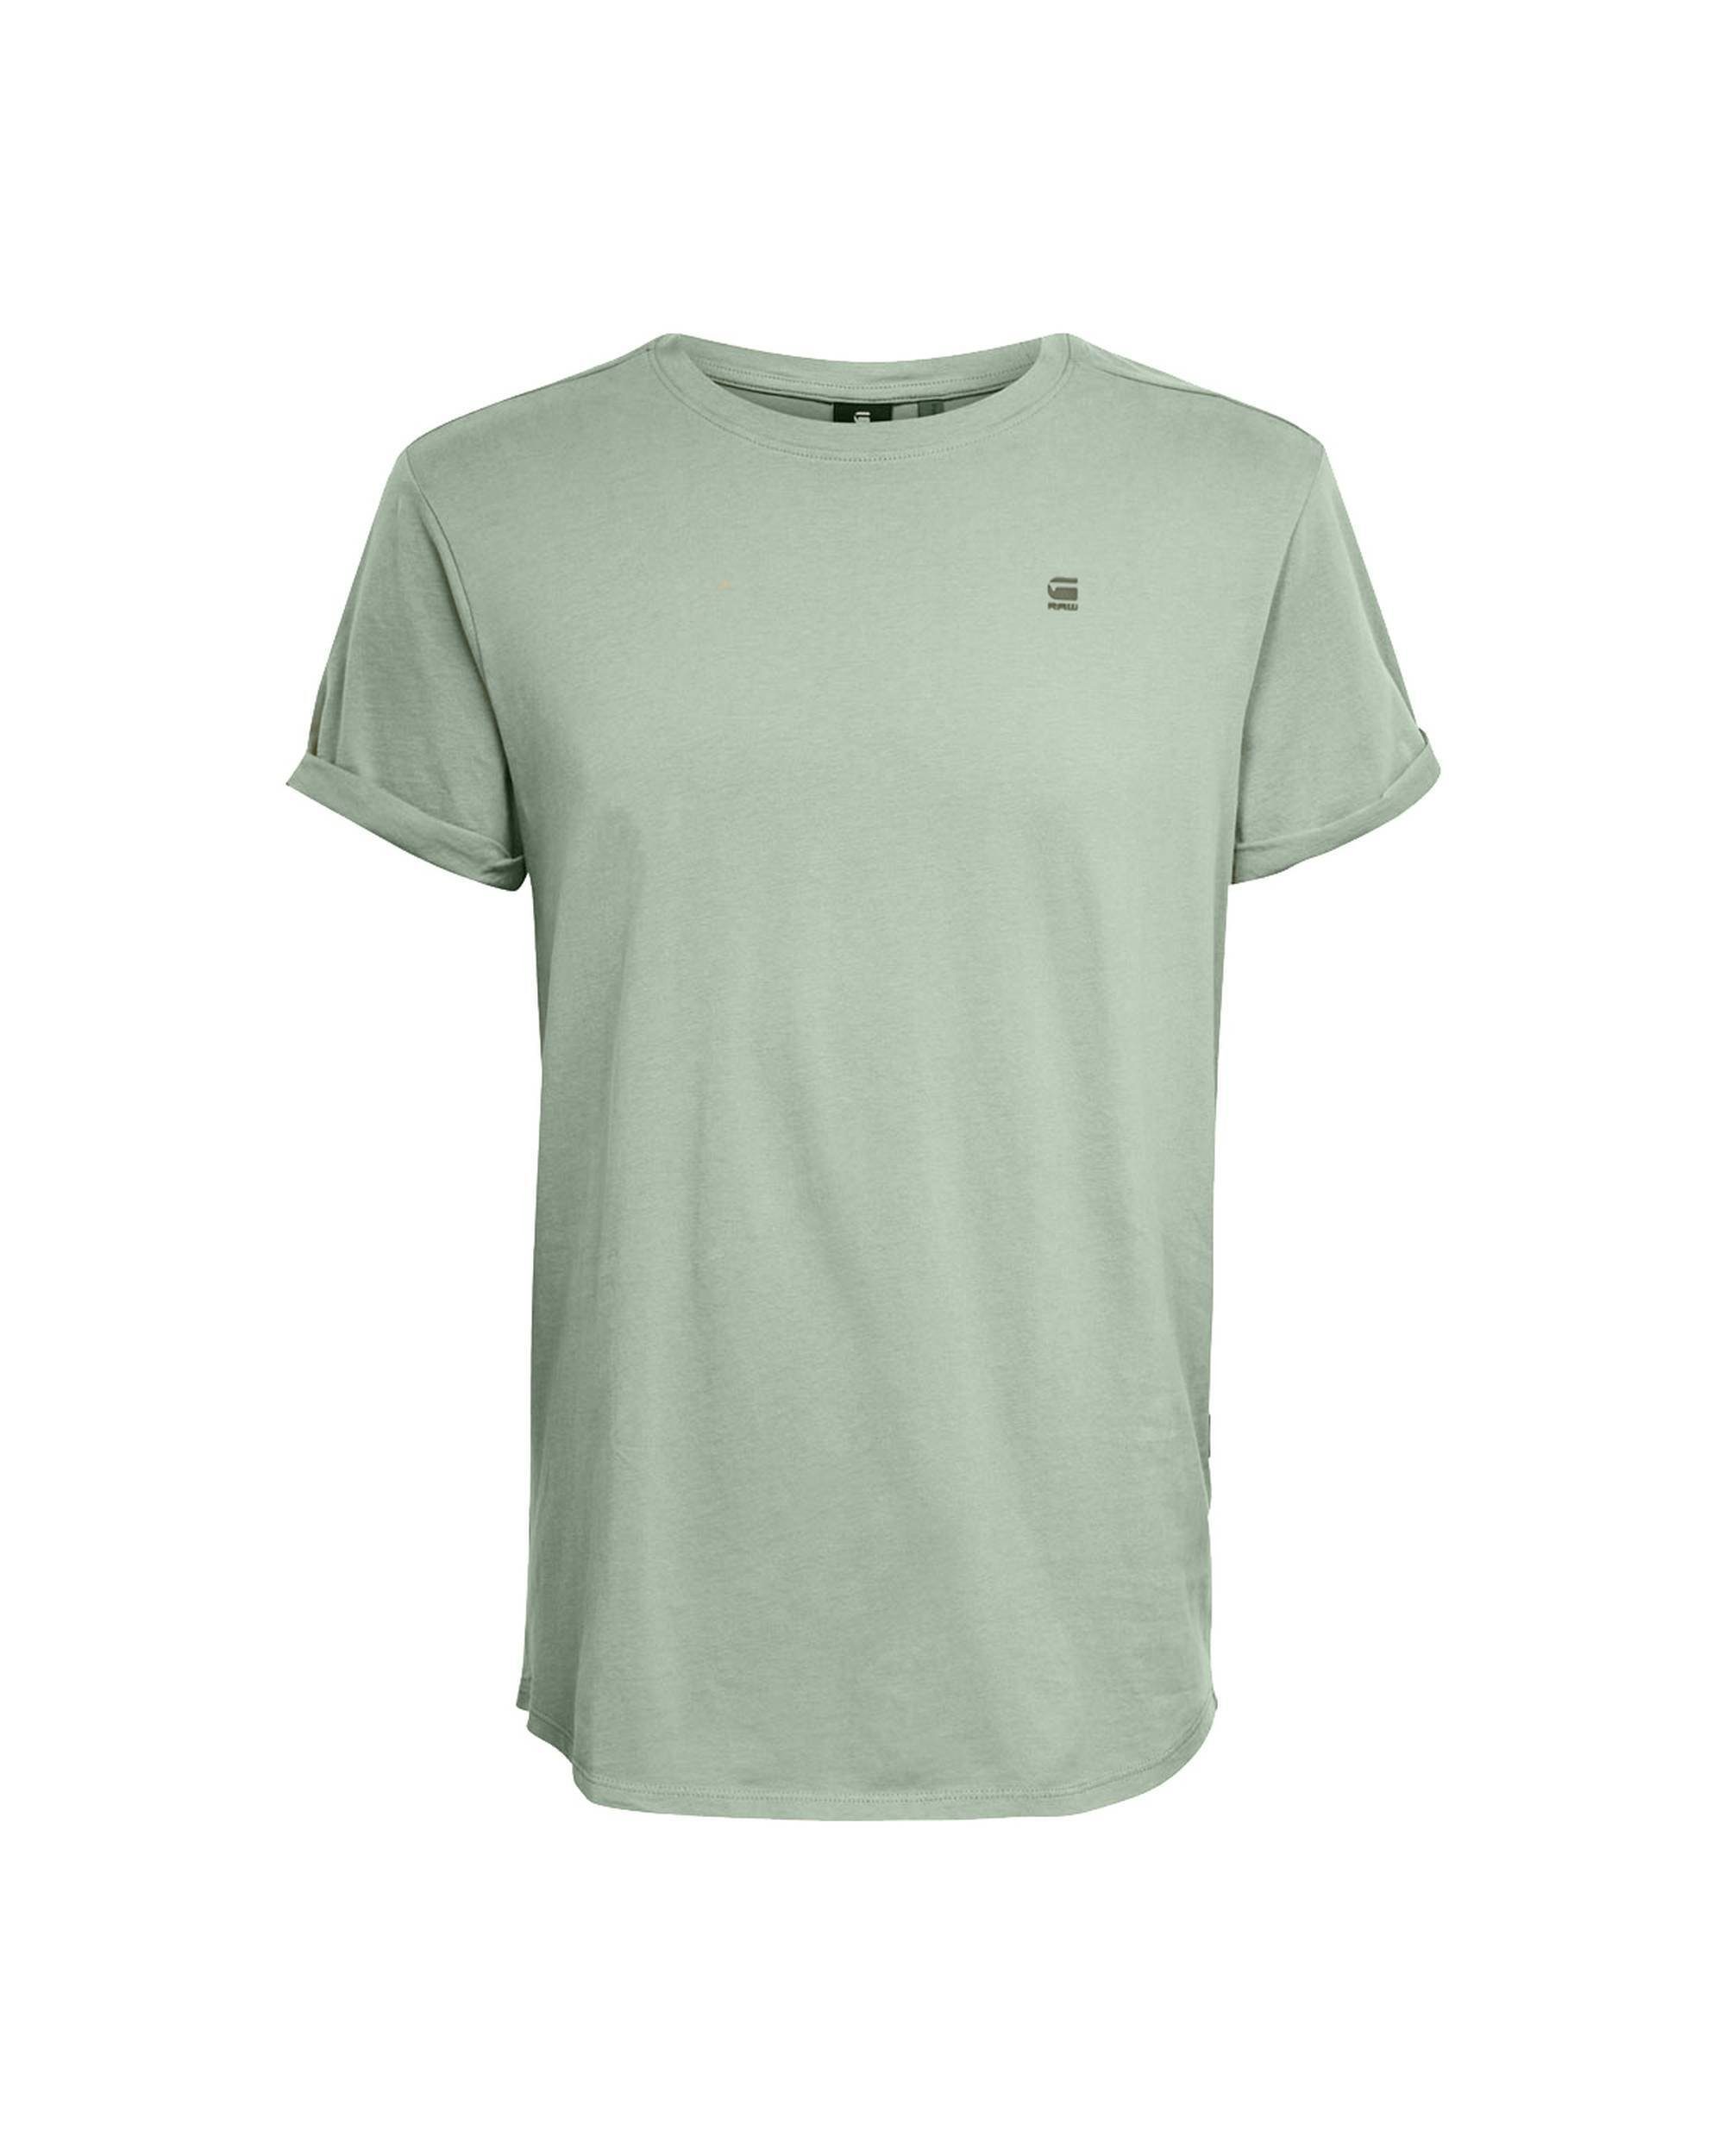 G-Star RAW T-Shirt Herren T-Shirt Cotton Rundhals, - Lash, Mintgrün Organic